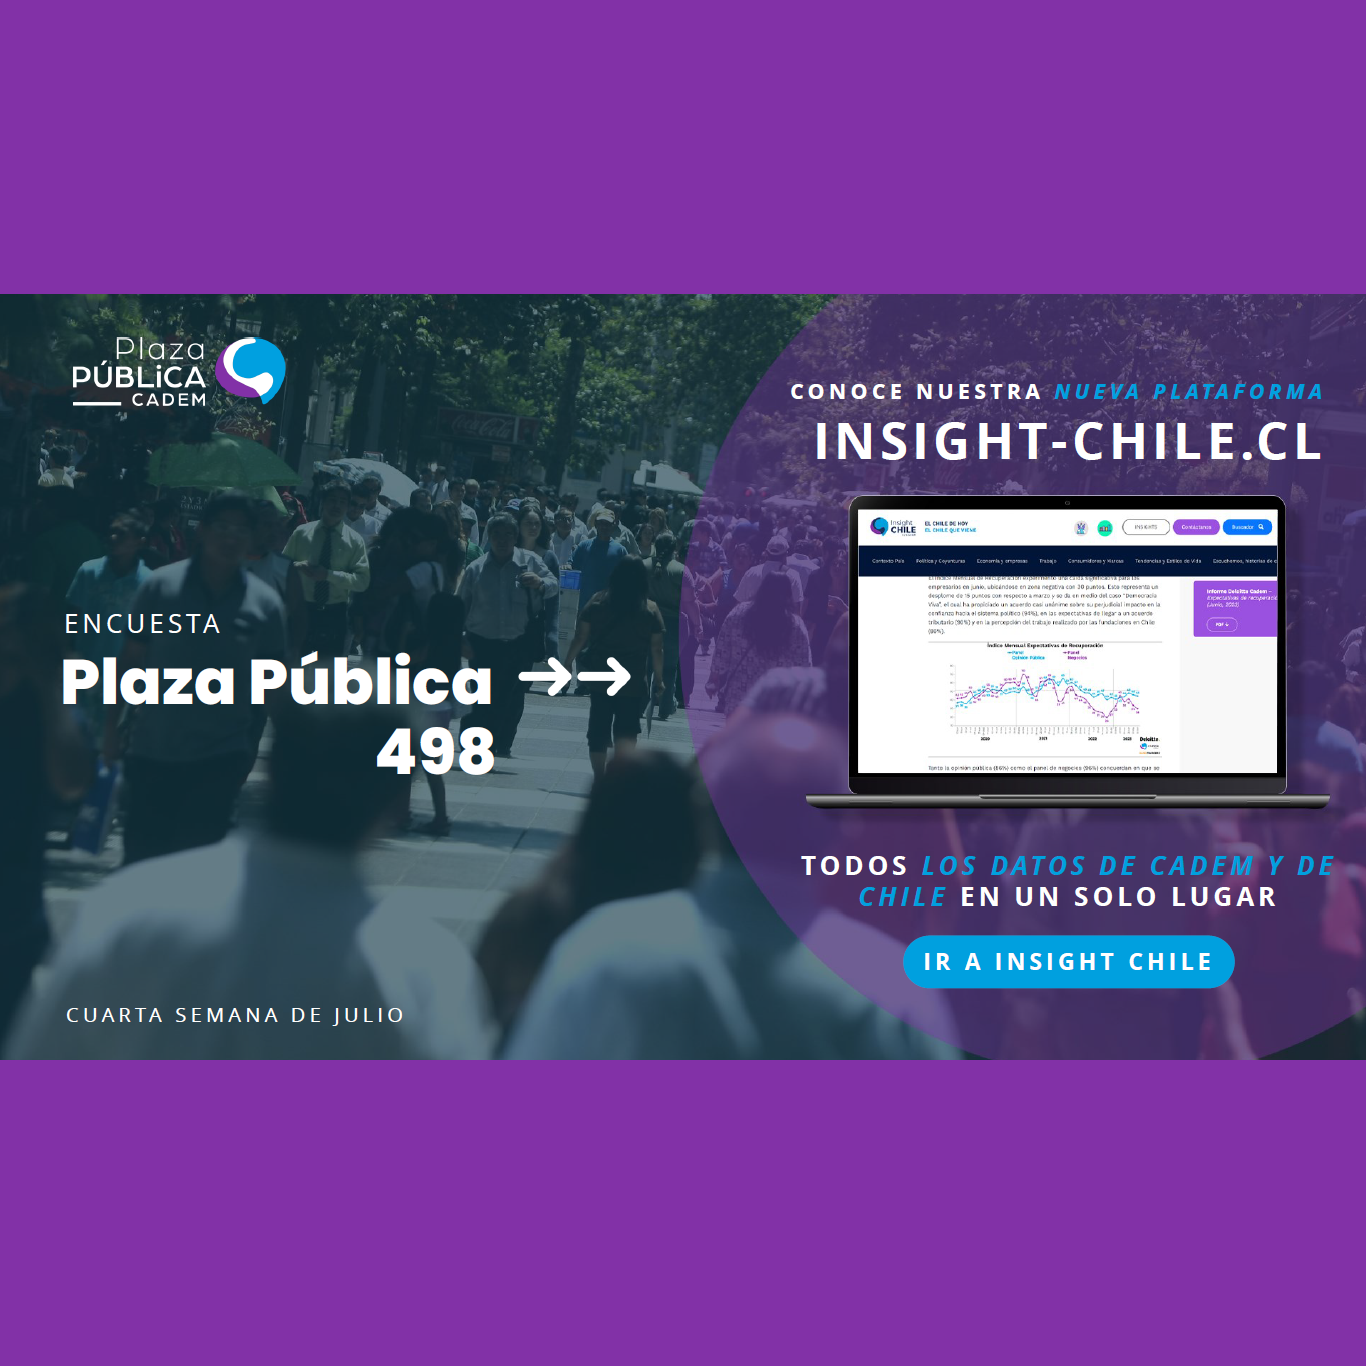 Encuesta Plaza Pública – 4ta semana de julio